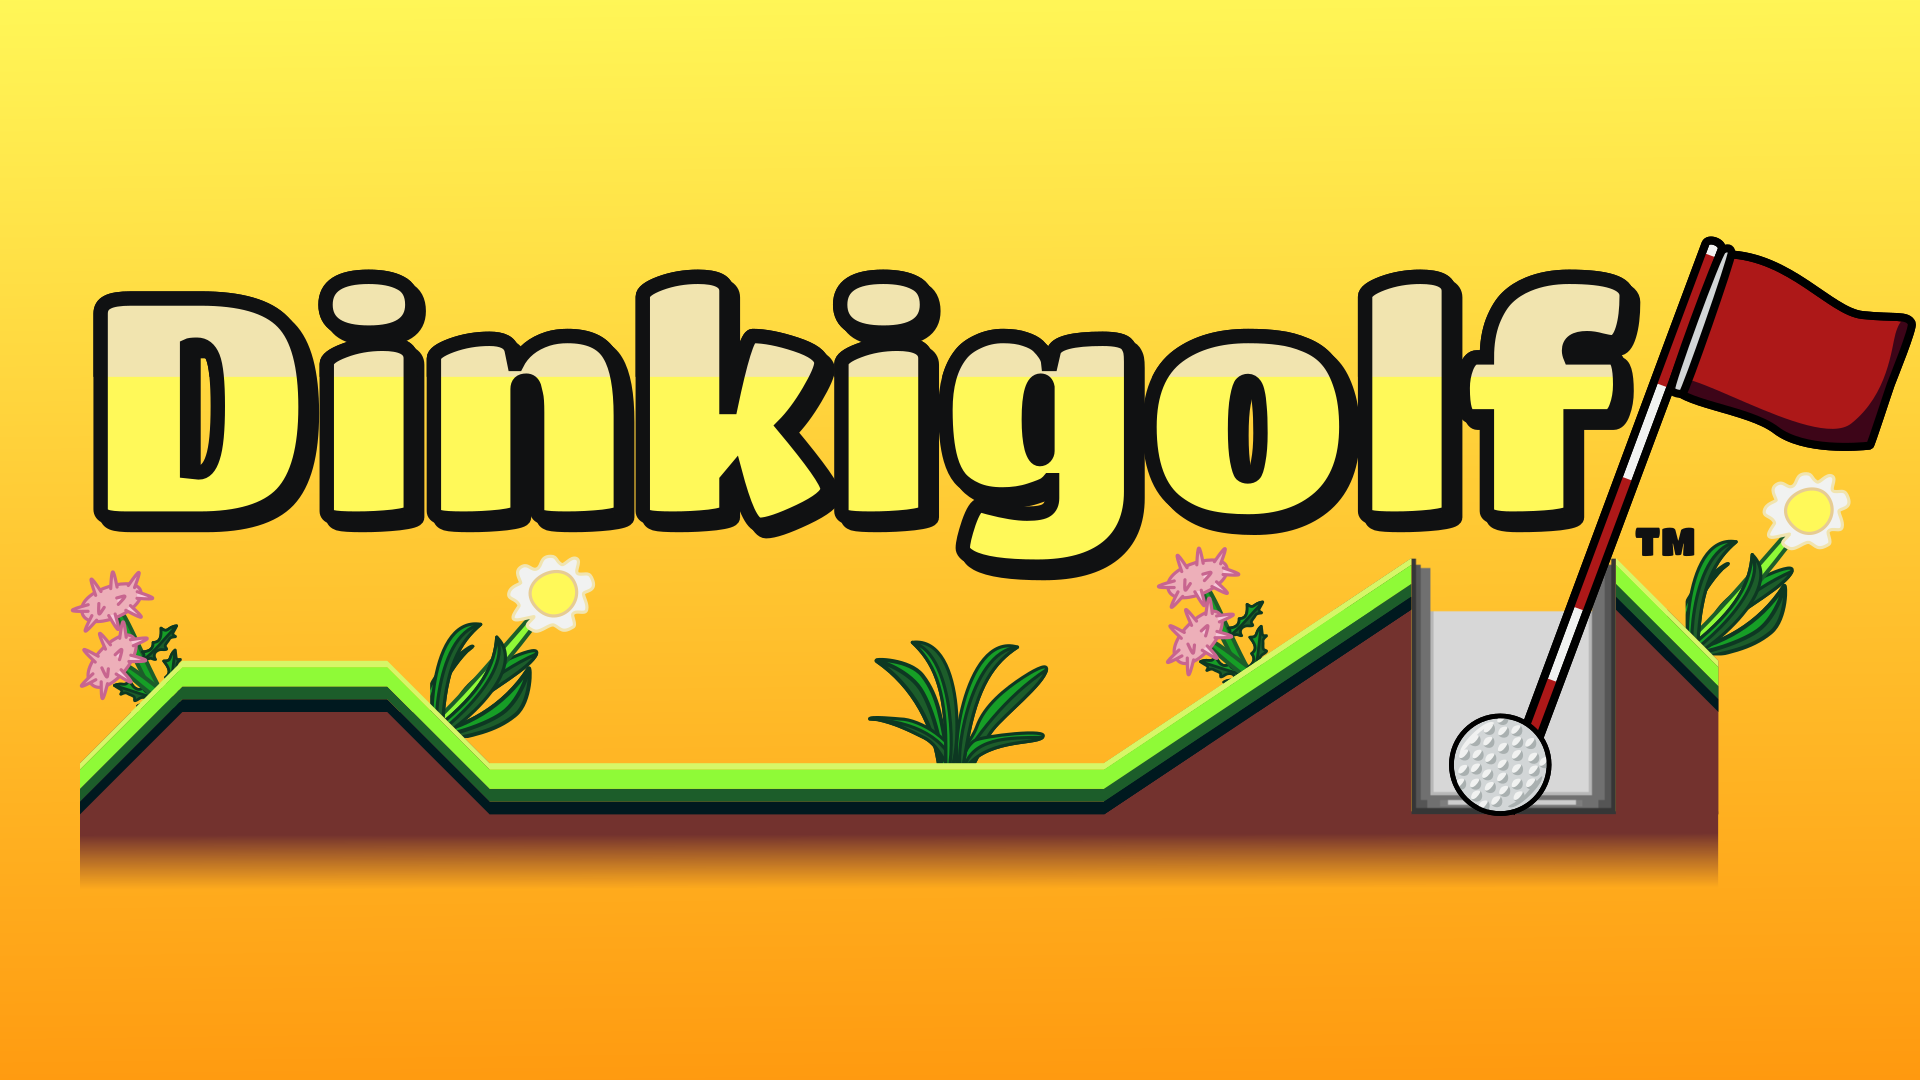 Dinkigolf Alt logo with background